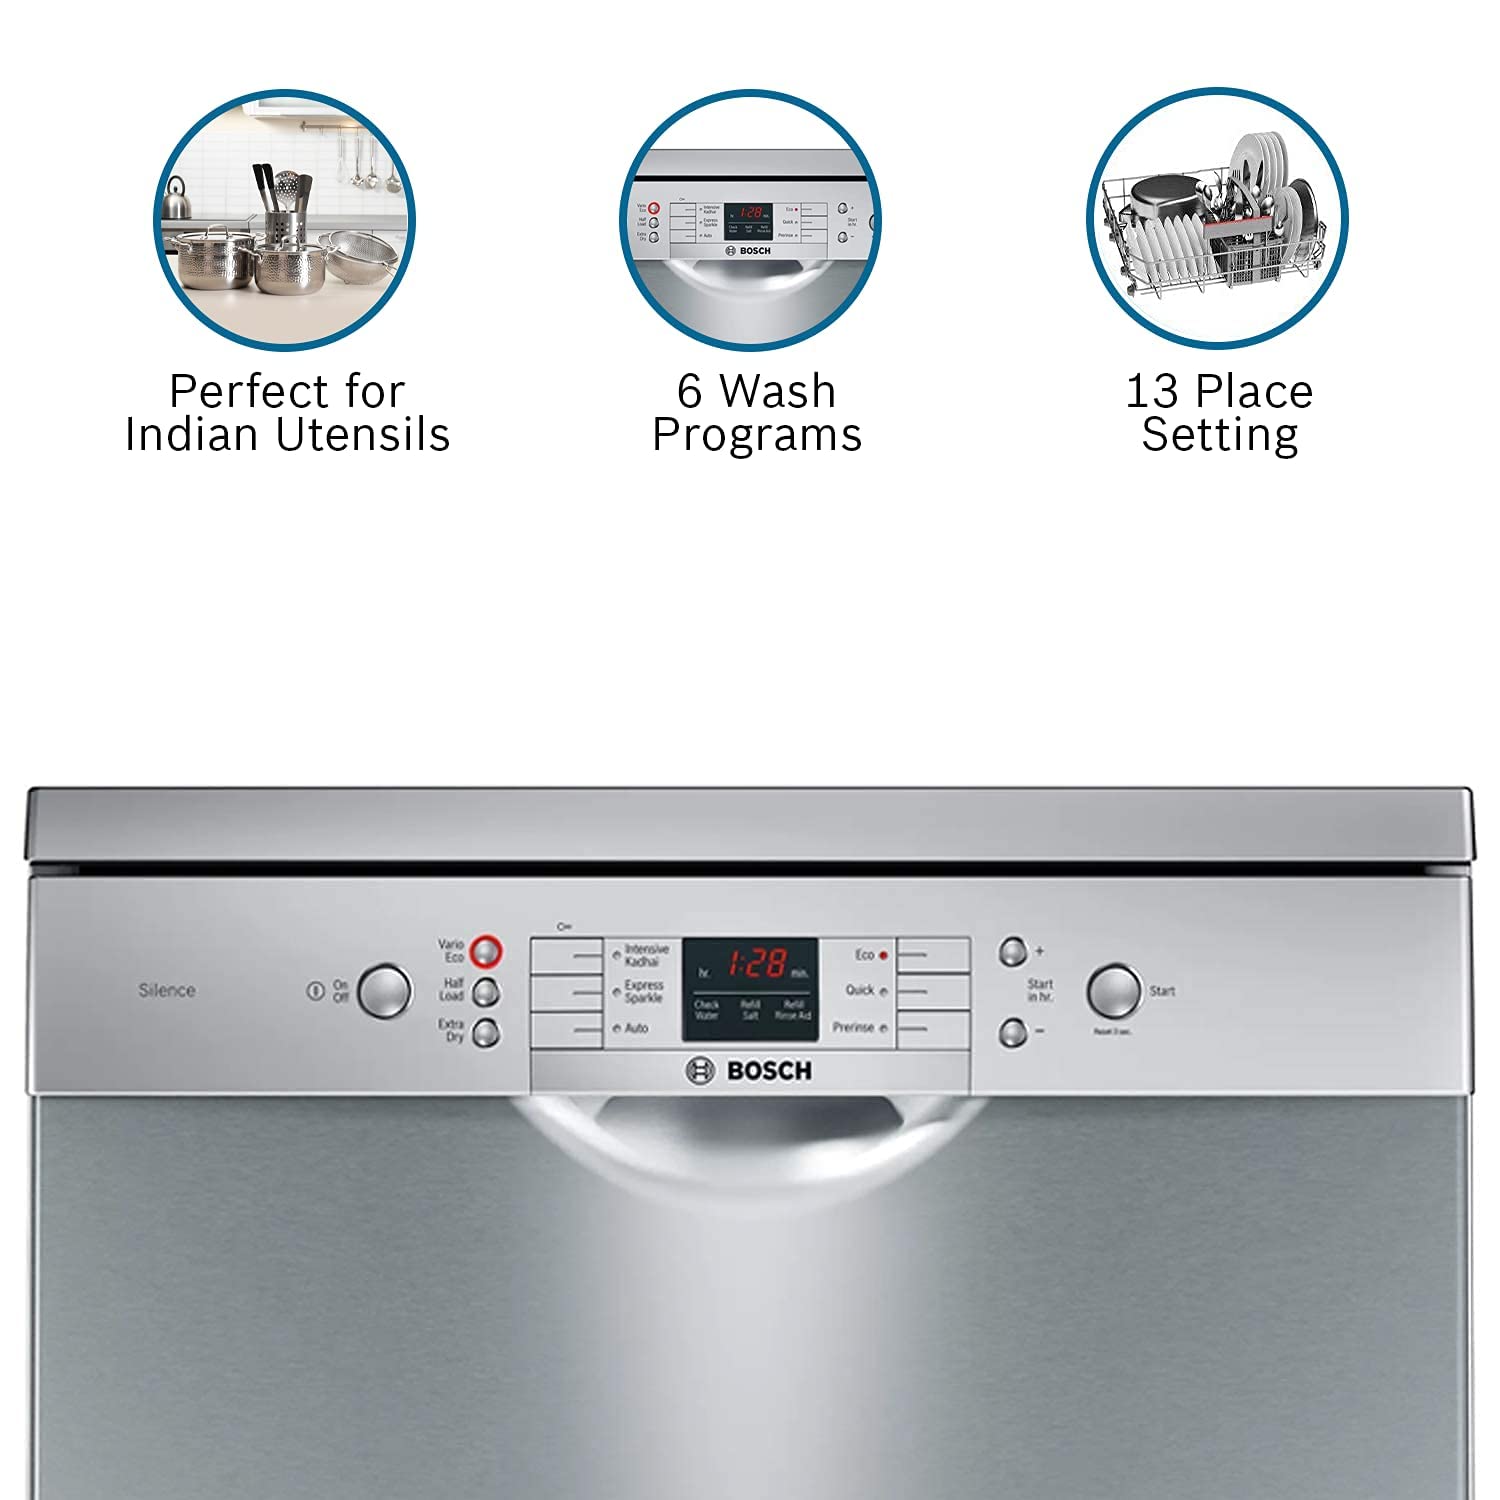 Bosch dishwasher power consumption in India